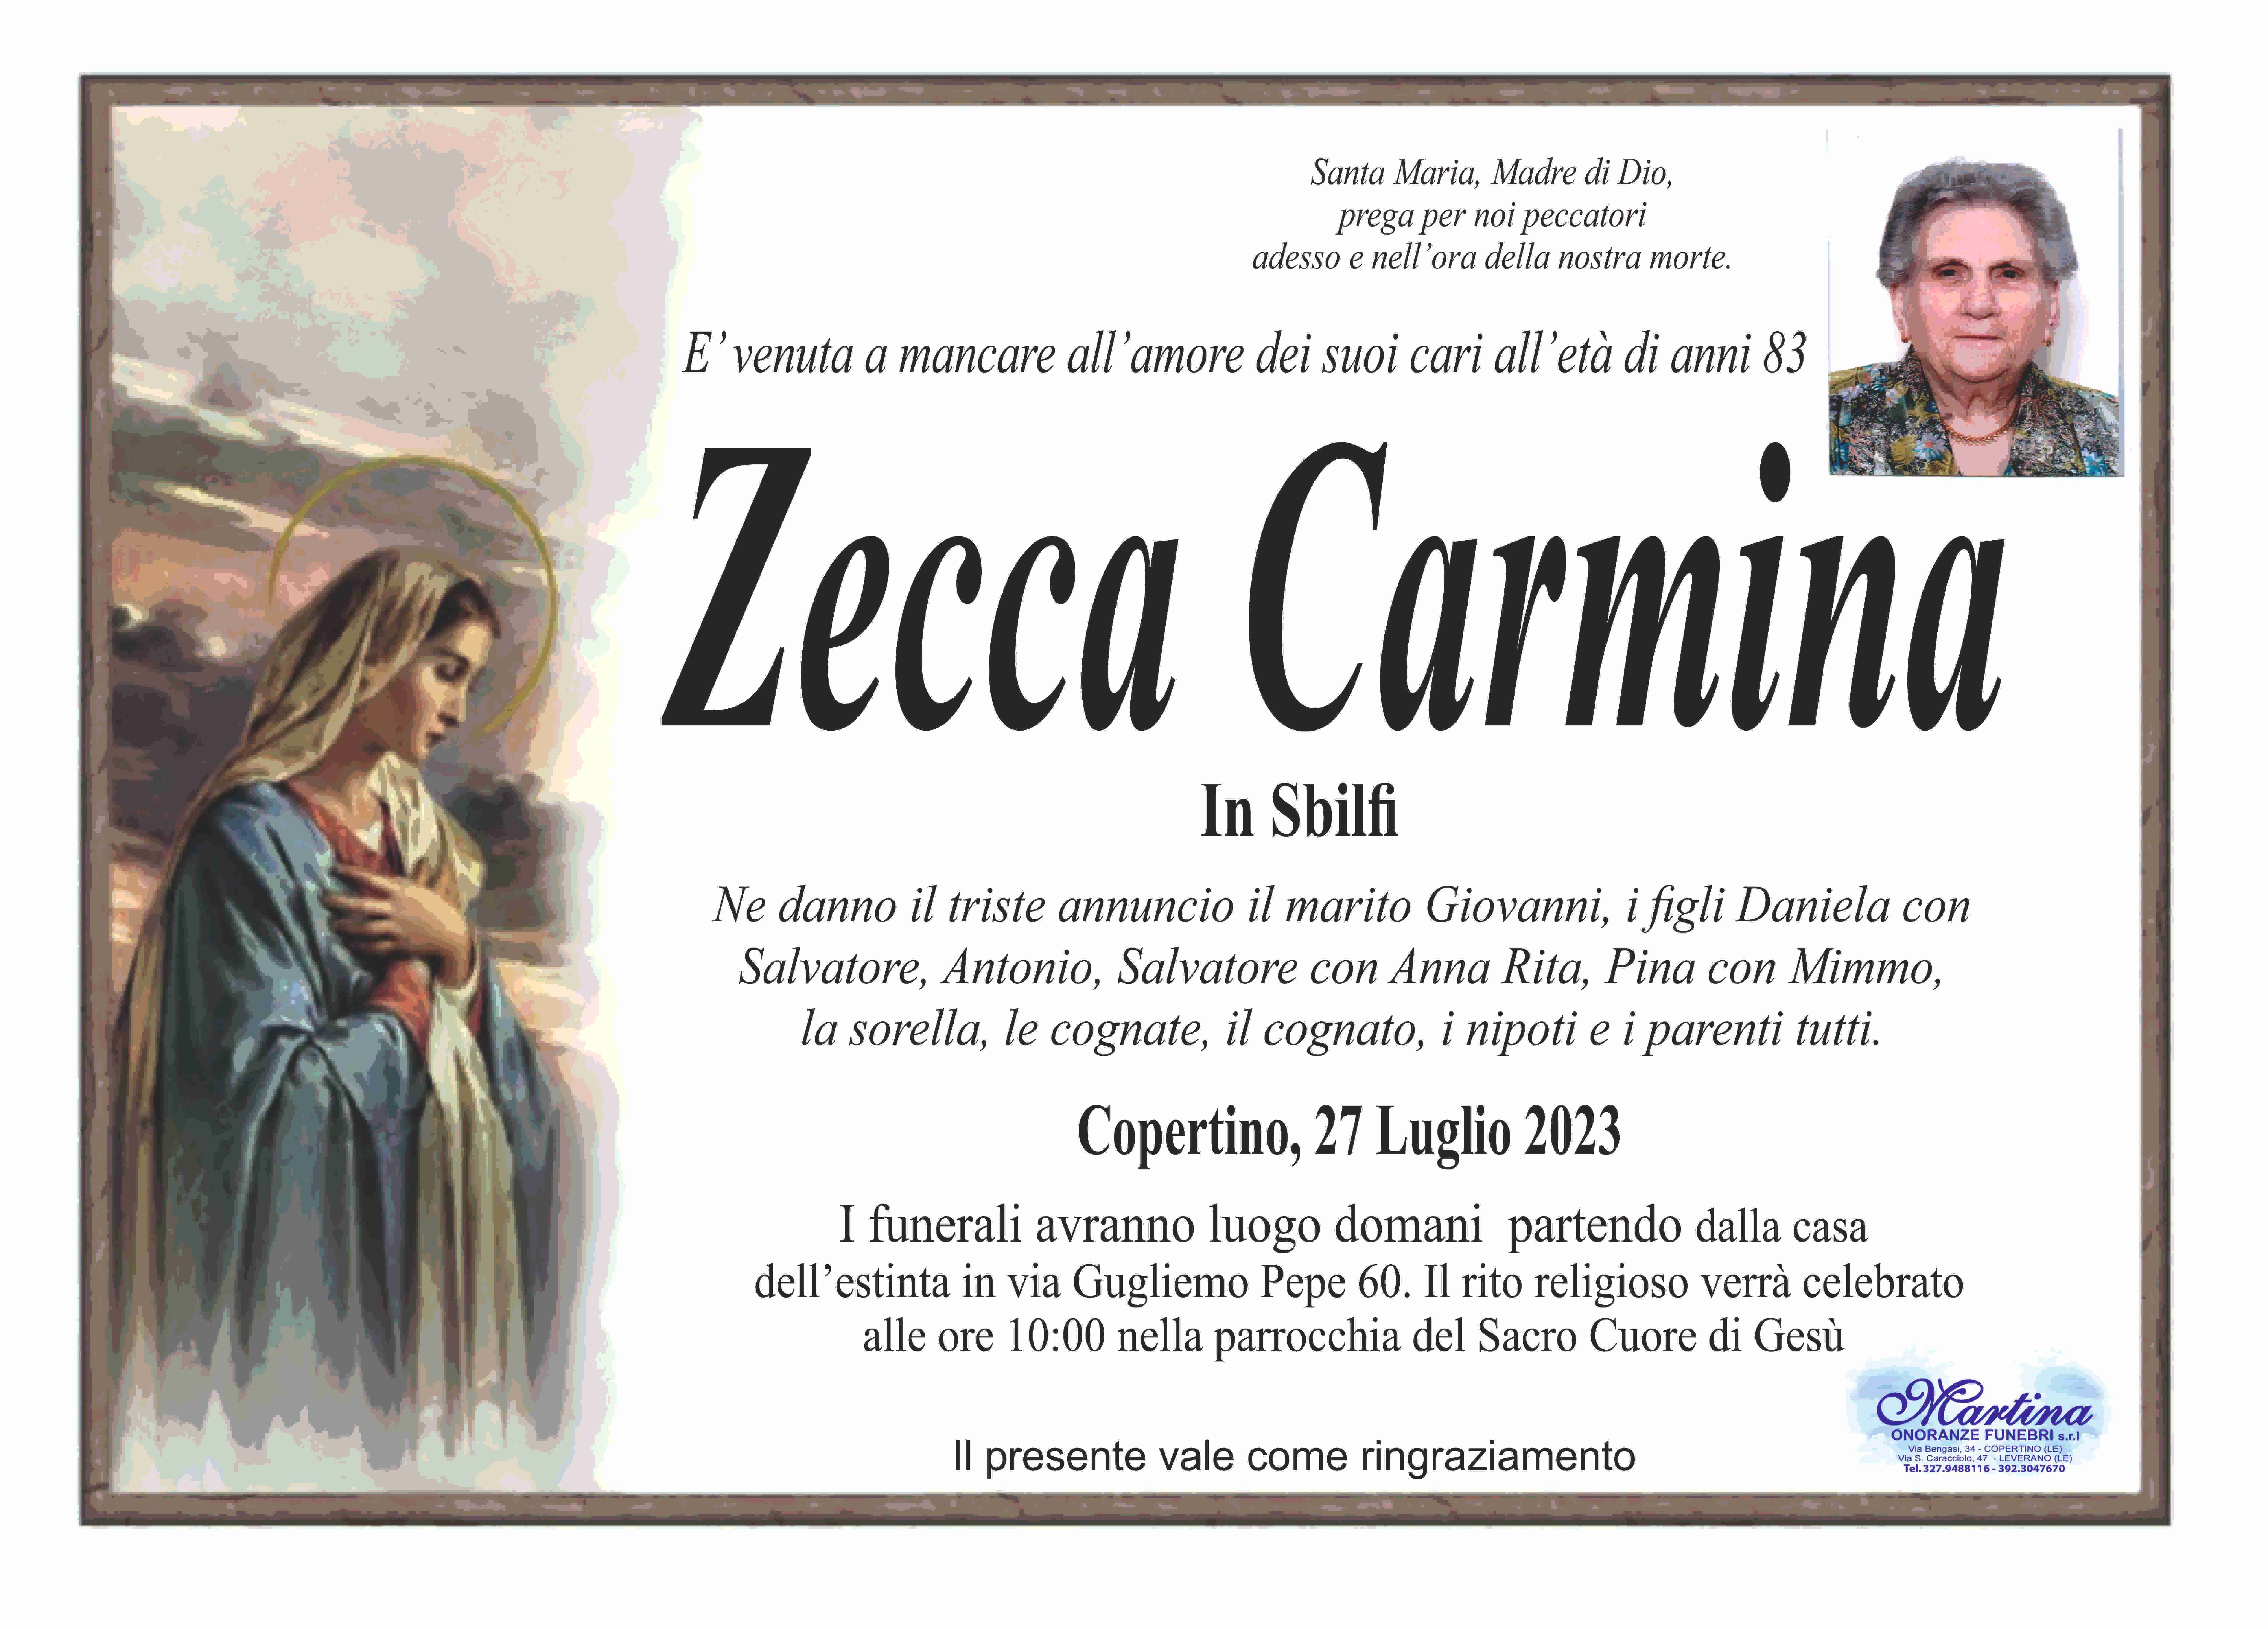 Carmina Zecca